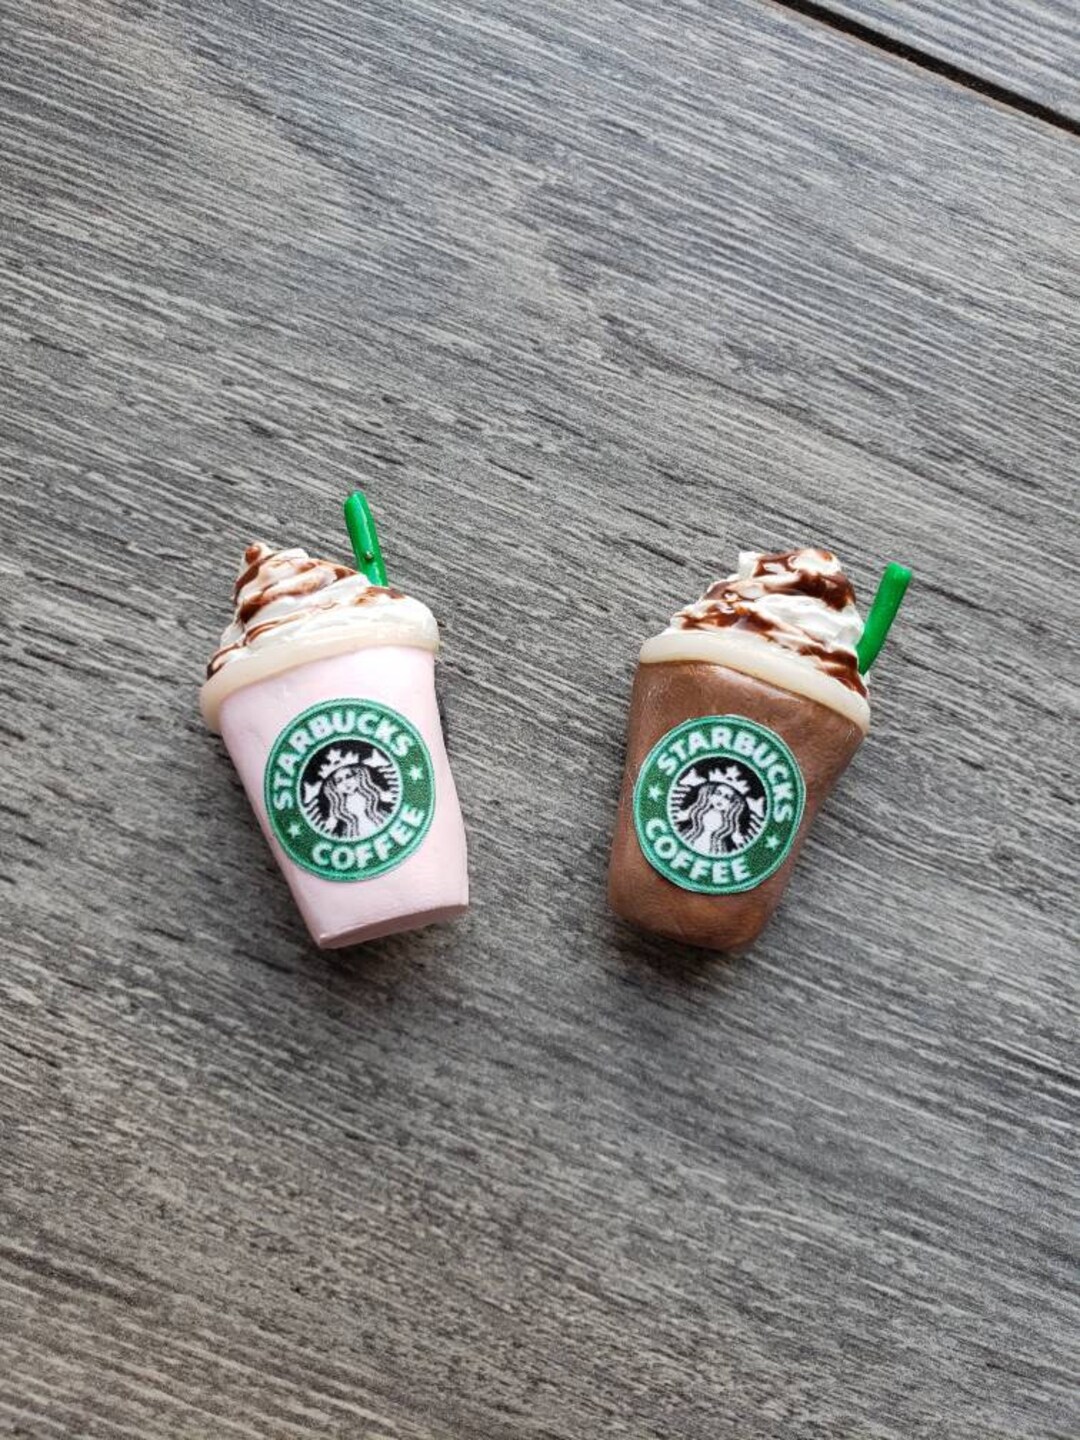 DIY Doll Miniature Accessories Starbucks Coffee - No Polymer Clay 